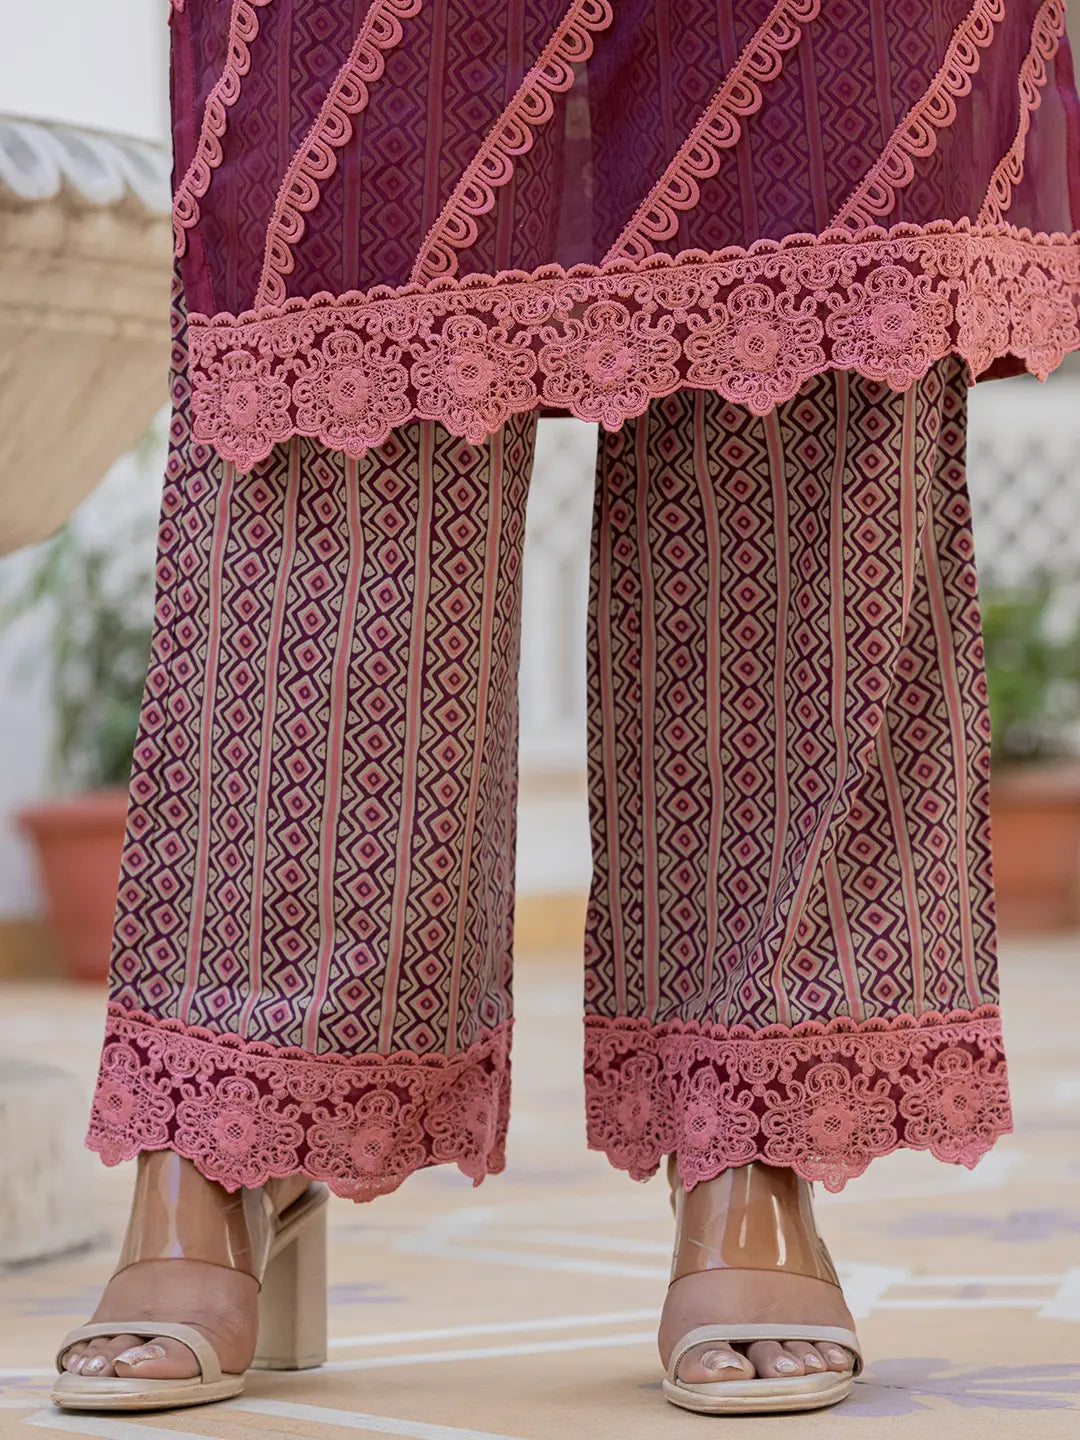 Purple Floral Print Pakistani Style Kurta Trouser And Dupatta Set With Lace Work-Yufta Store-6885SKDPRM